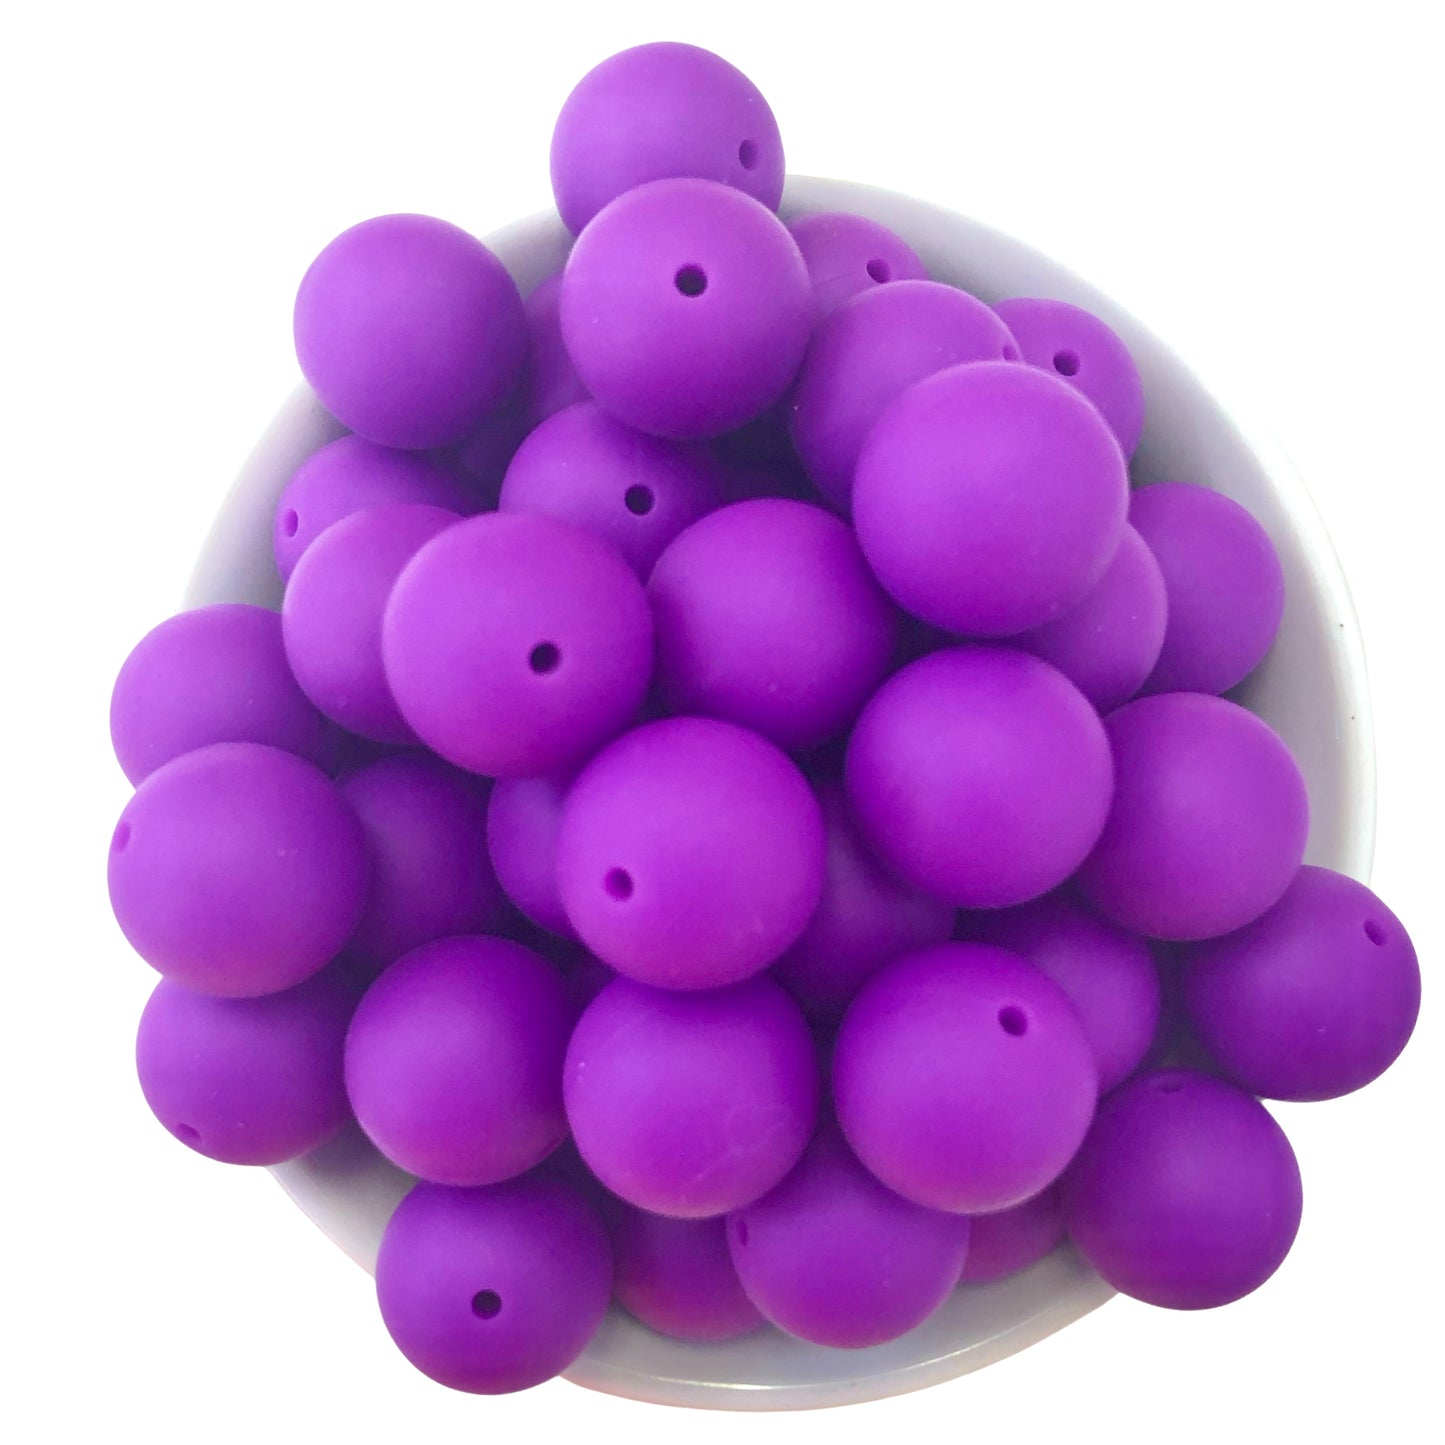 Purple Prince 19mm Silicone Beads - 5 pk.